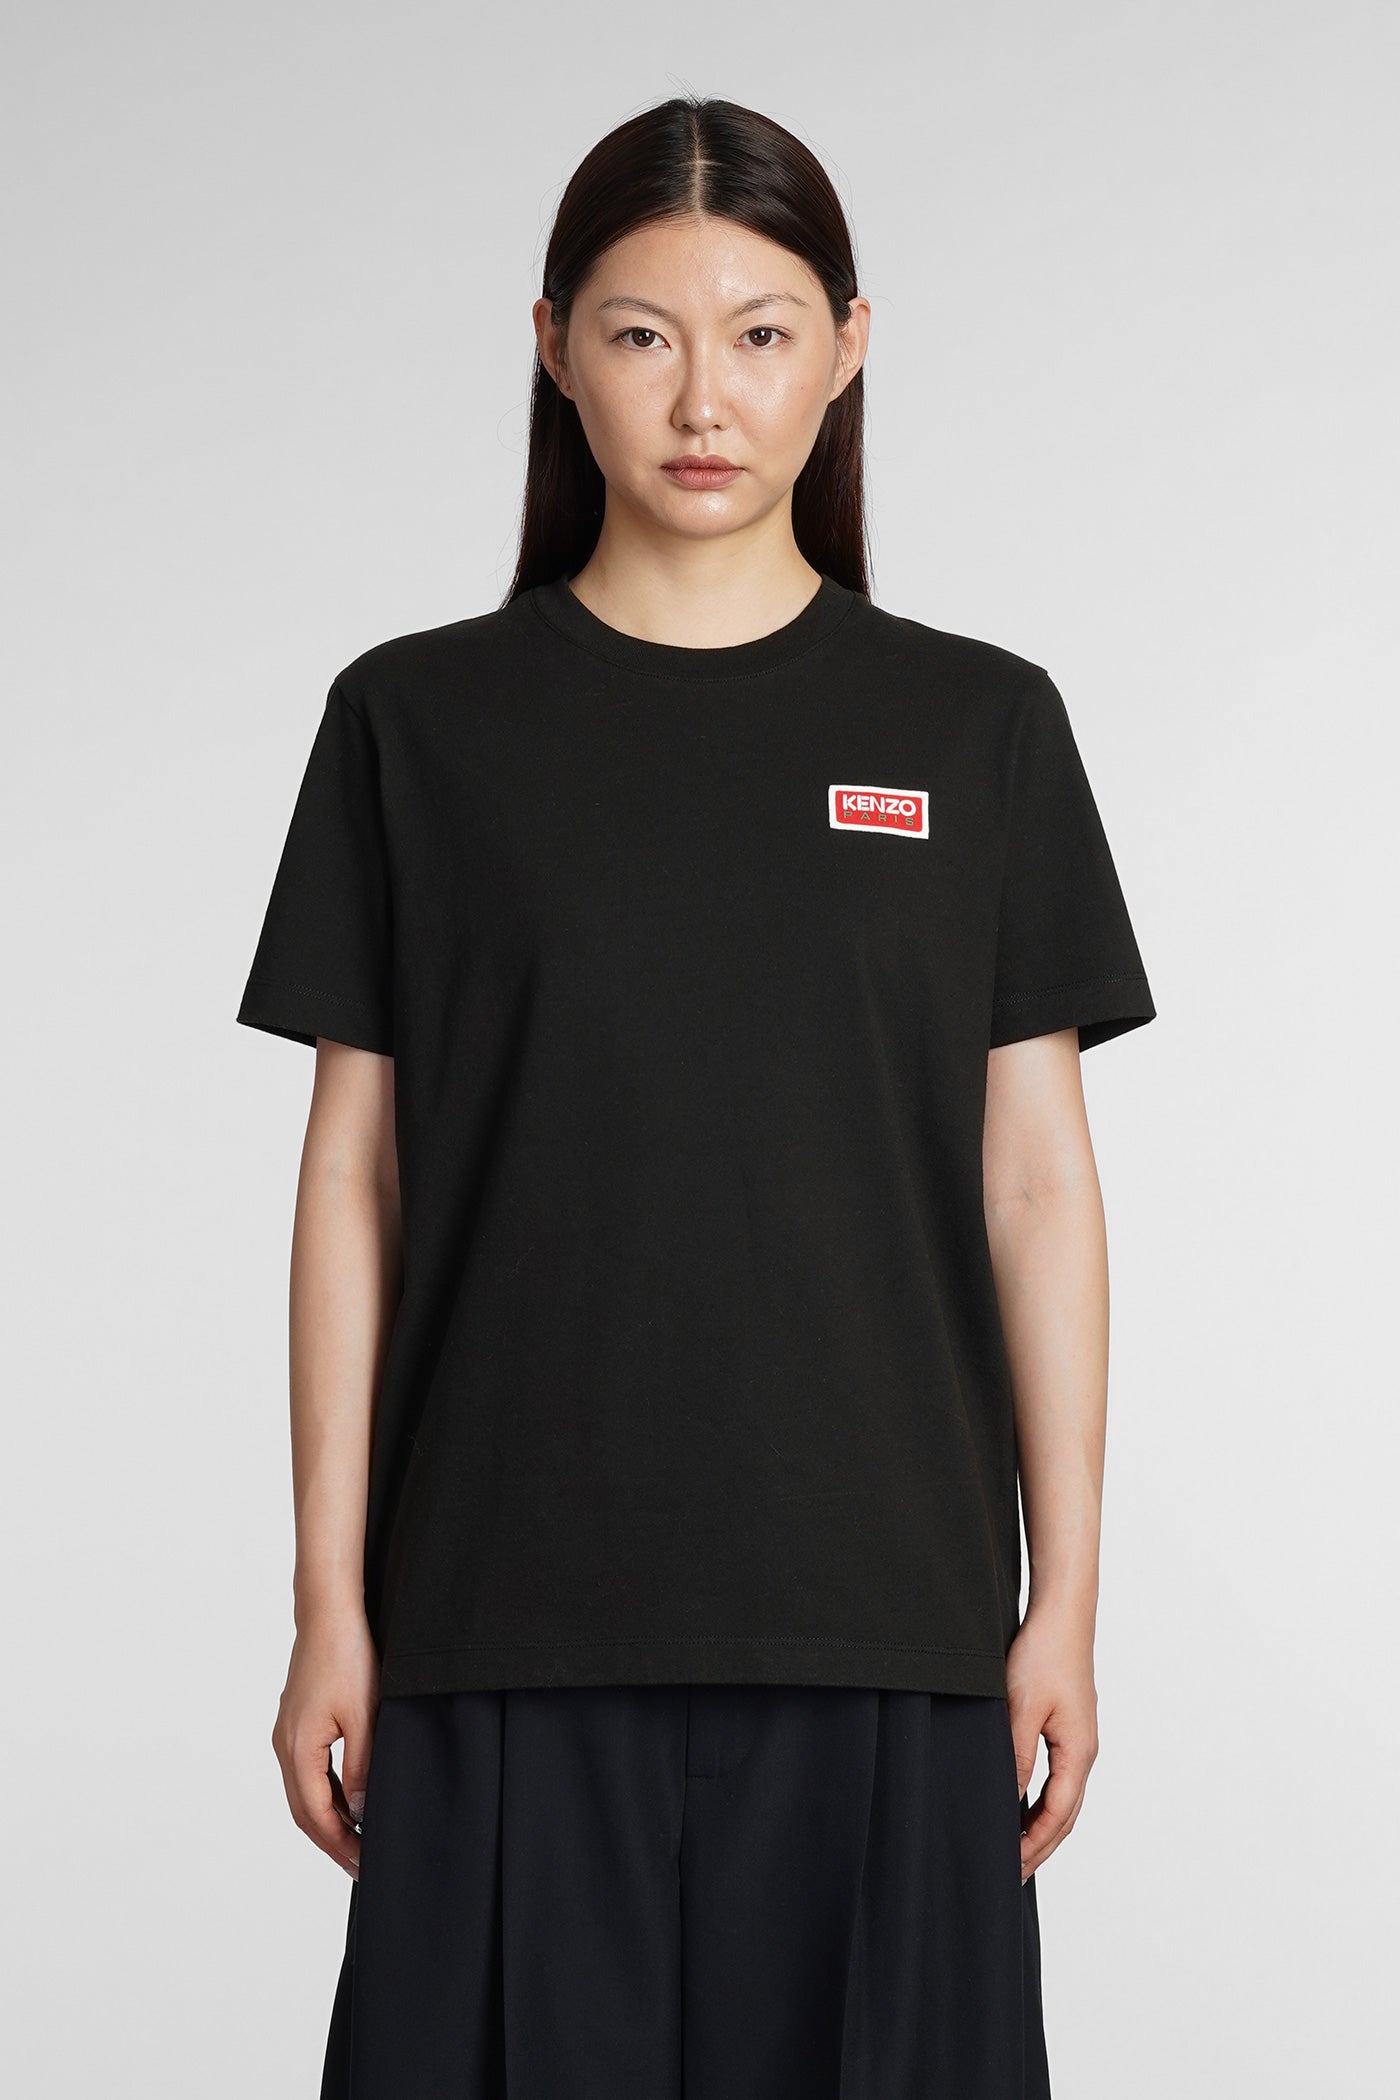 T-Shirt in black cotton